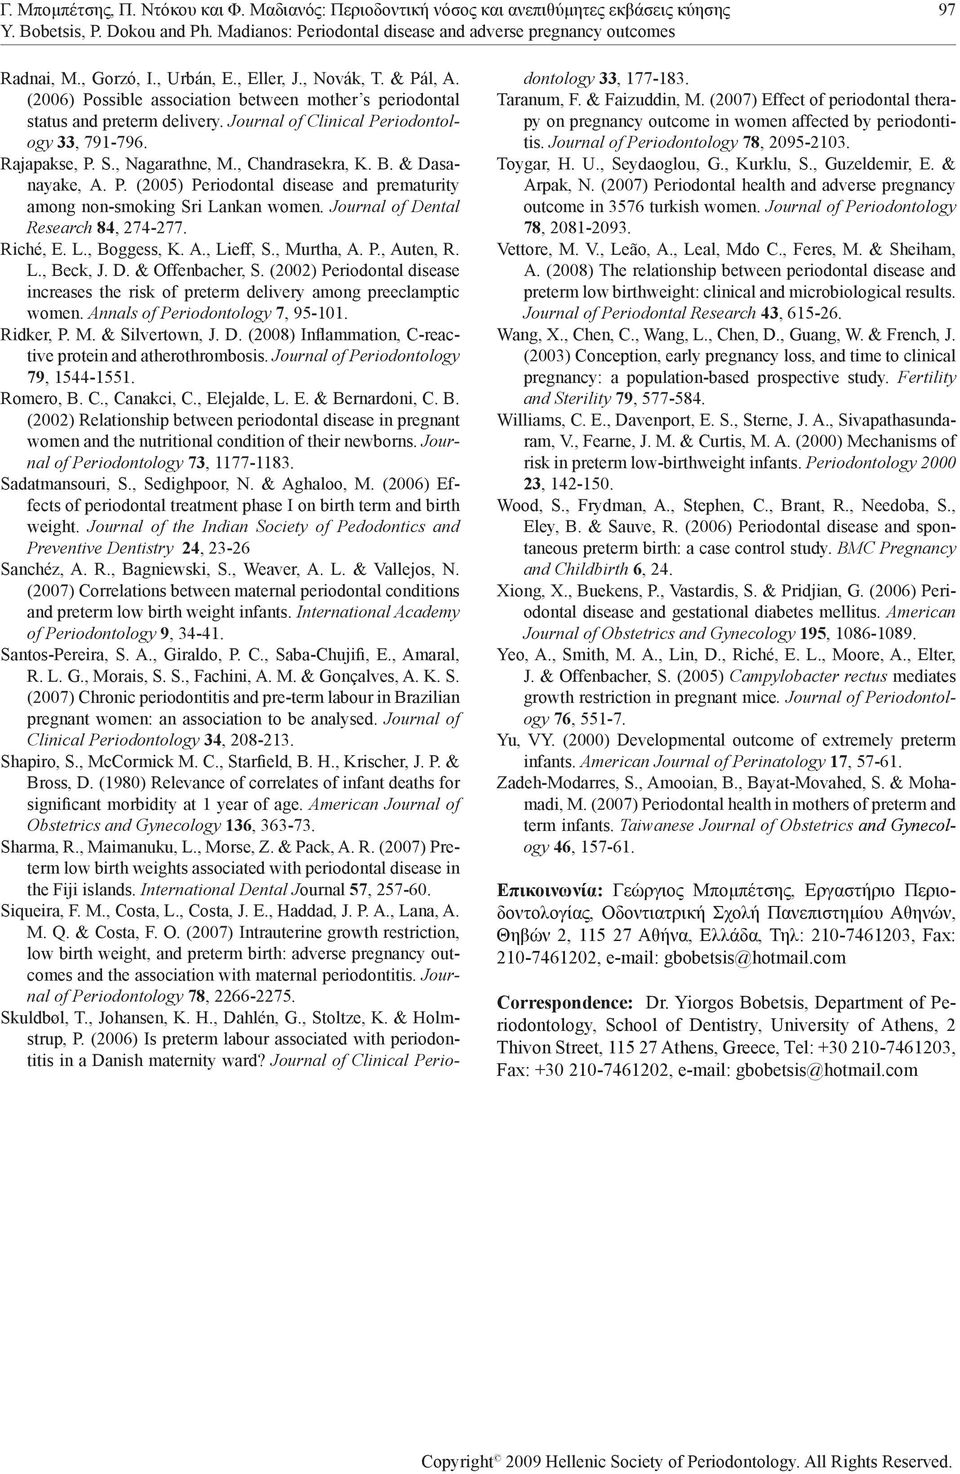 Rajapakse, P. S., Nagarathne, M., Chandrasekra, K. B. & Dasanayake, A. P. (2005) Periodontal disease and prematurity among non-smoking Sri Lankan women. Journal of Dental Research 84, 274-277.